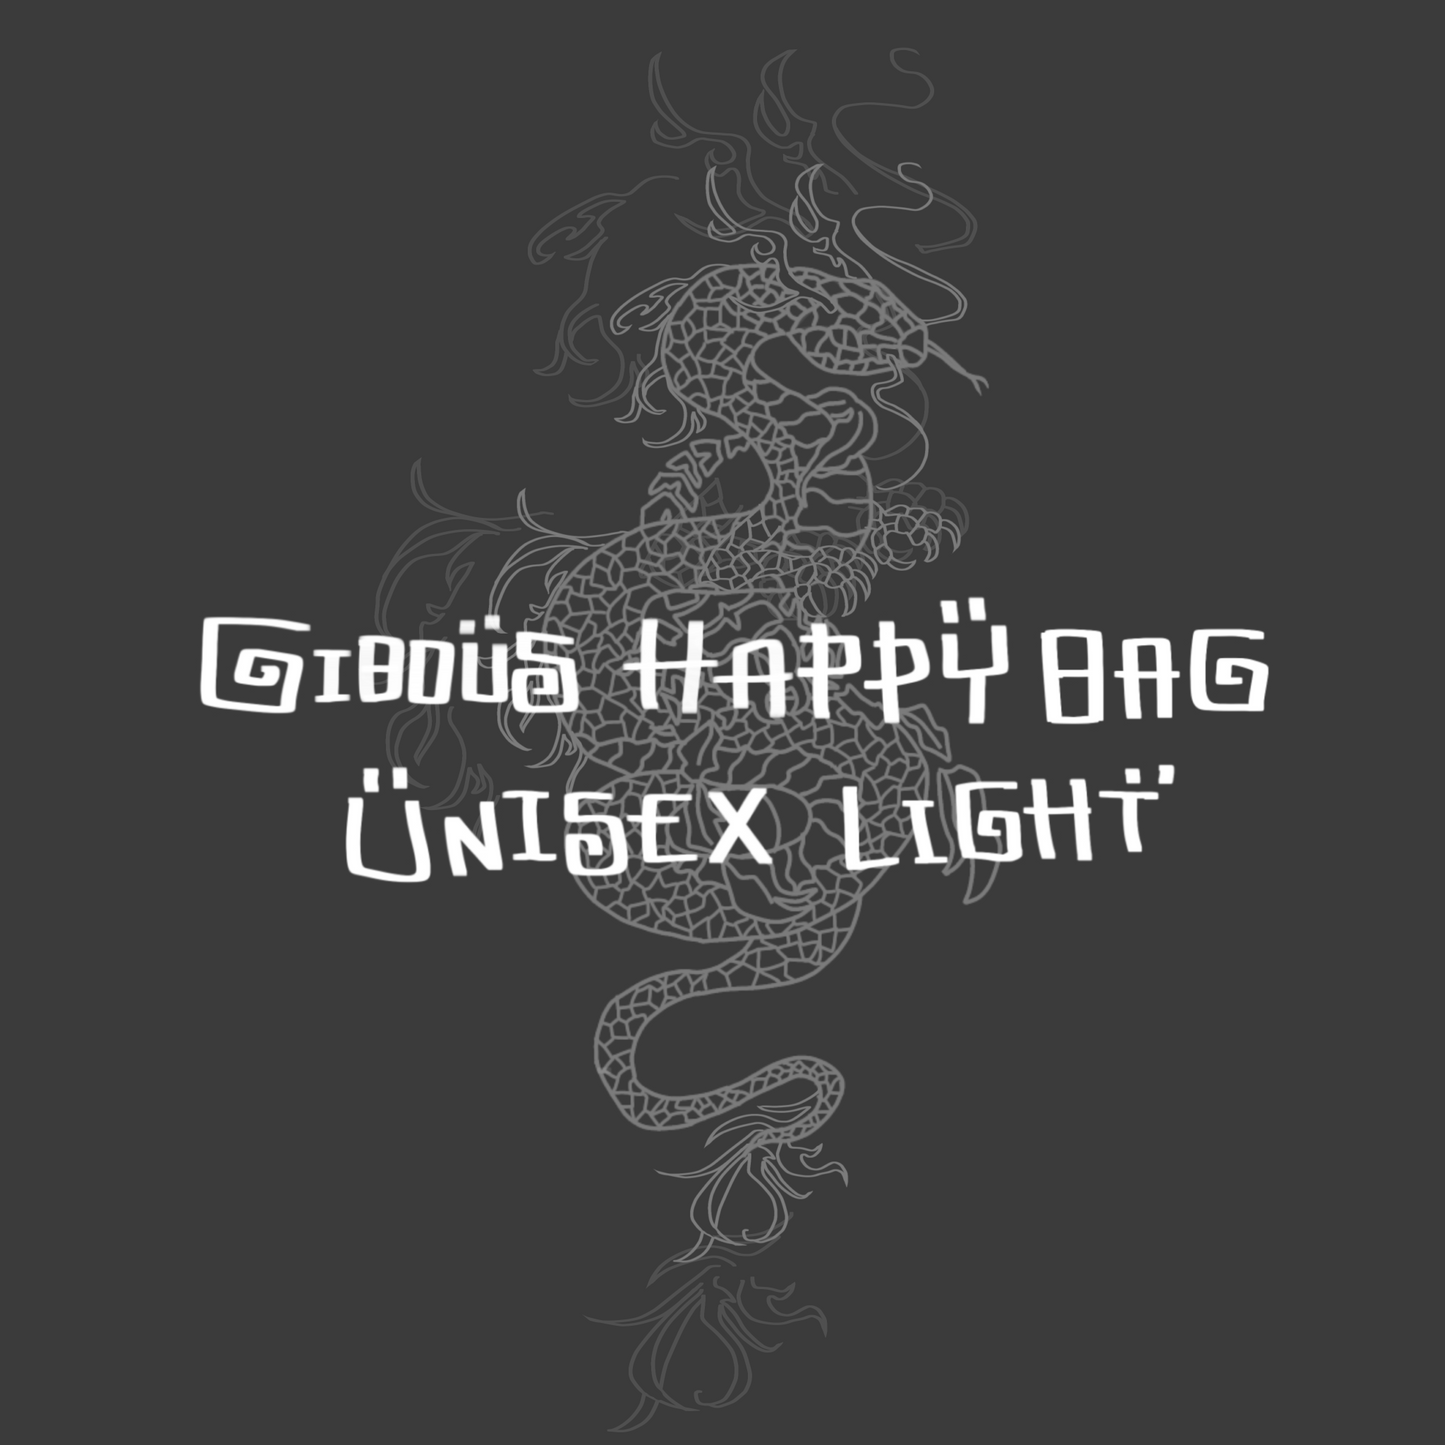 gibous happy bag unisex light 2024